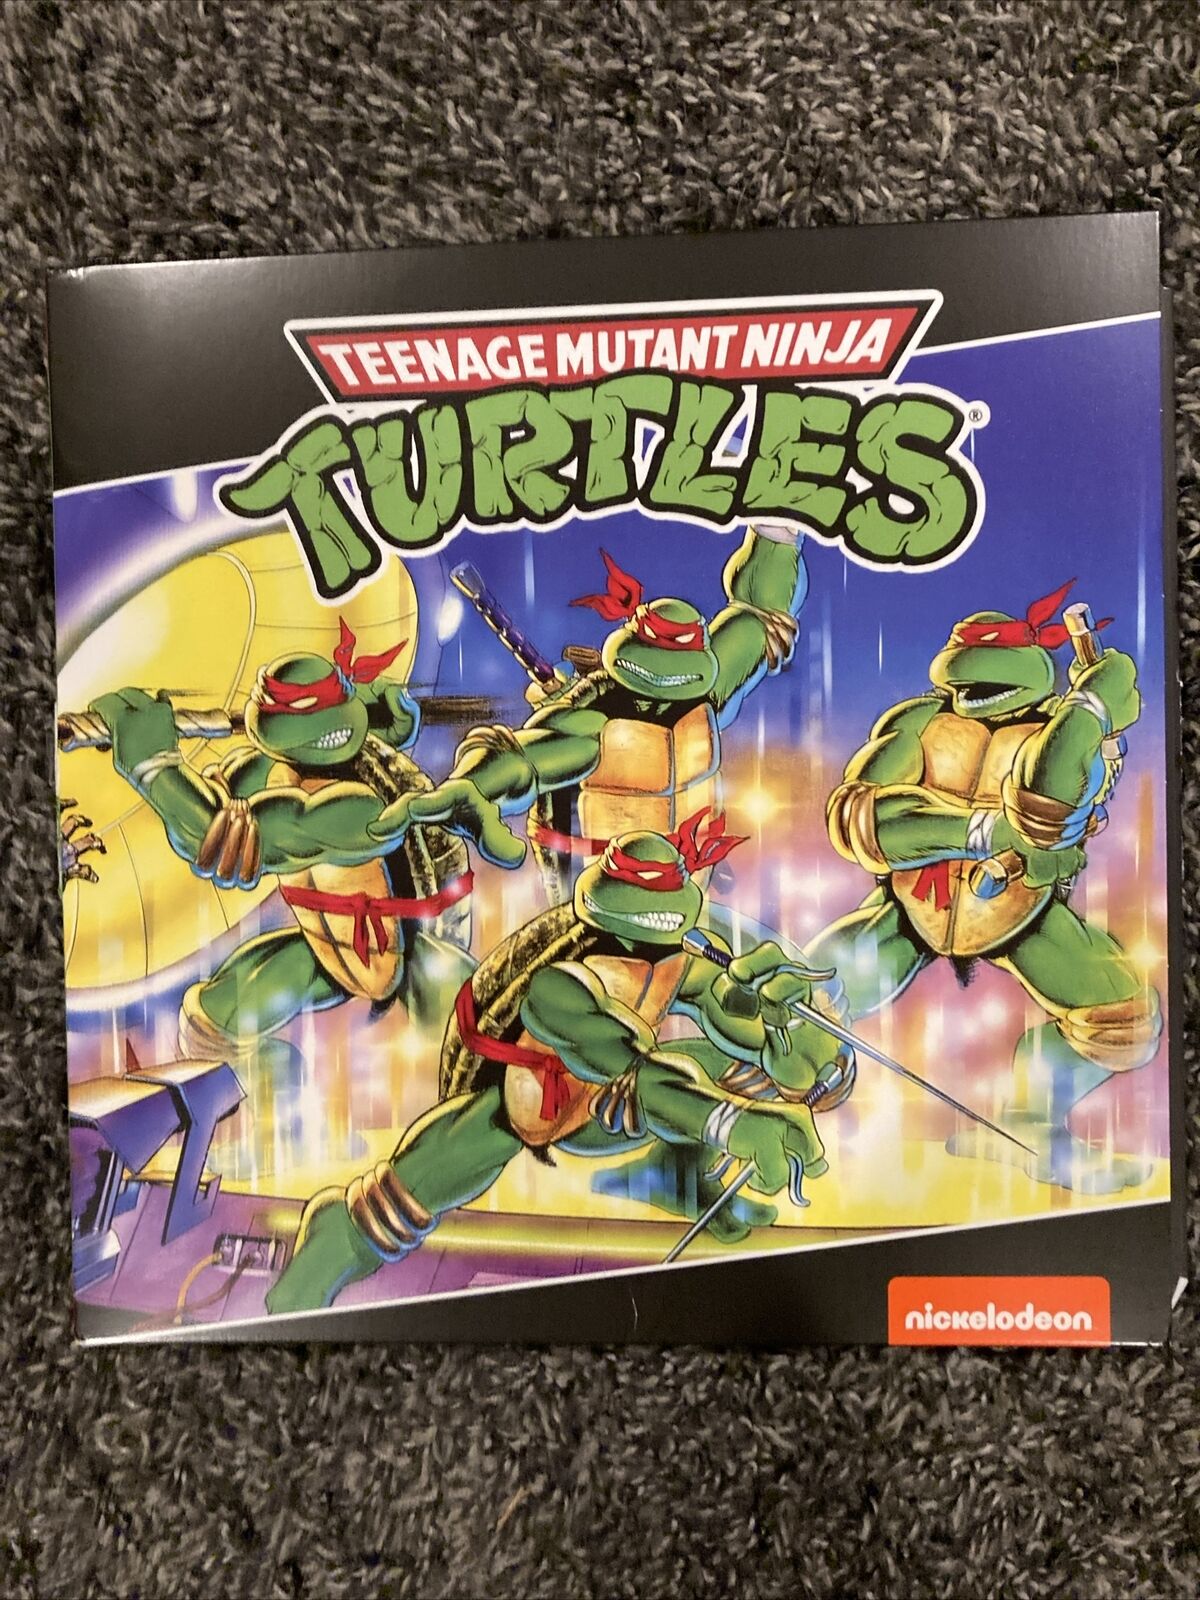 Teenage Mutant Ninja Turtles NES Vinyl Soundtrack Video Game